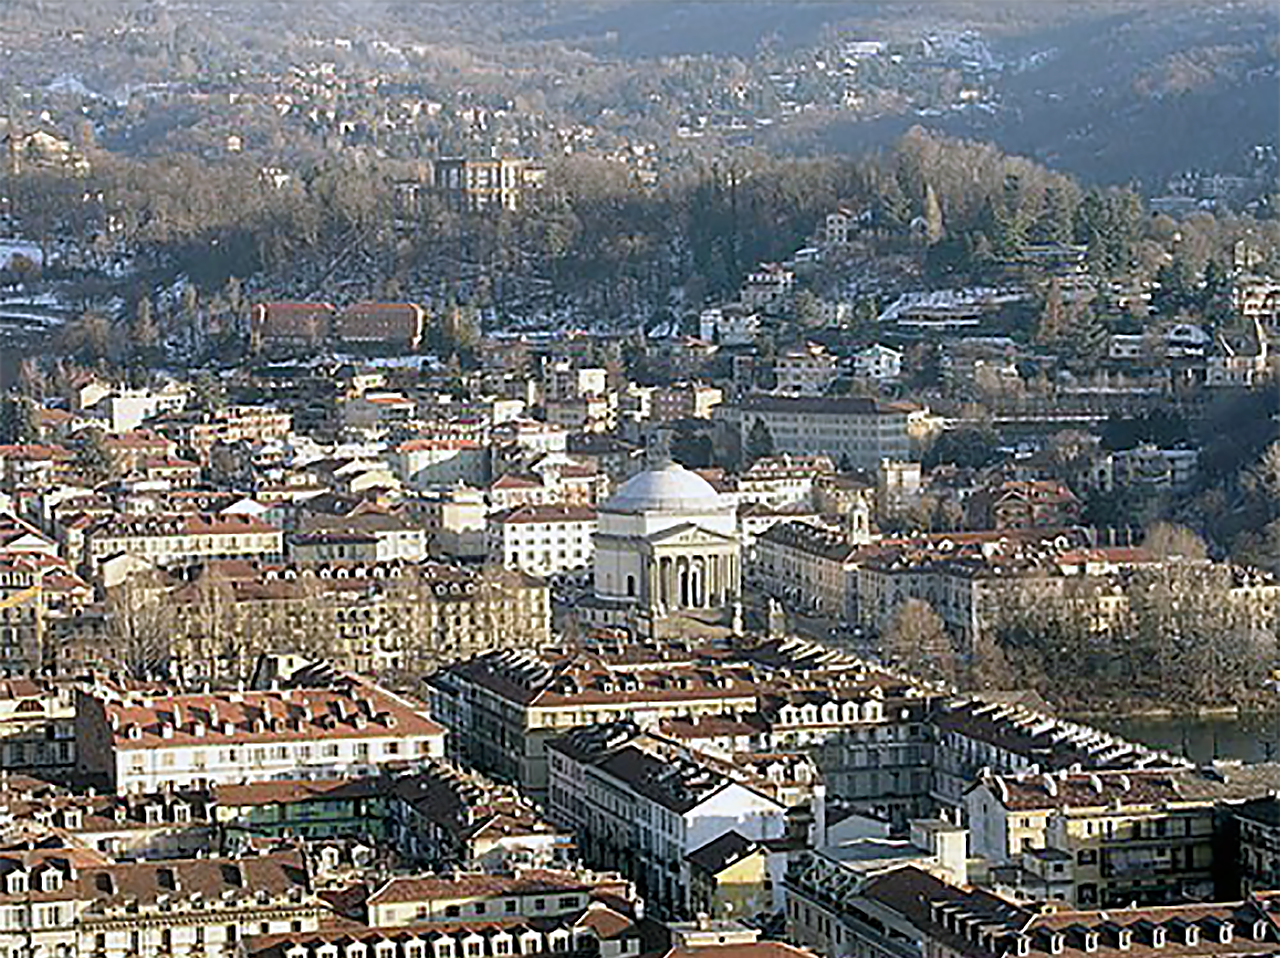 1280x958px-The-City-of-Torino-vWA24